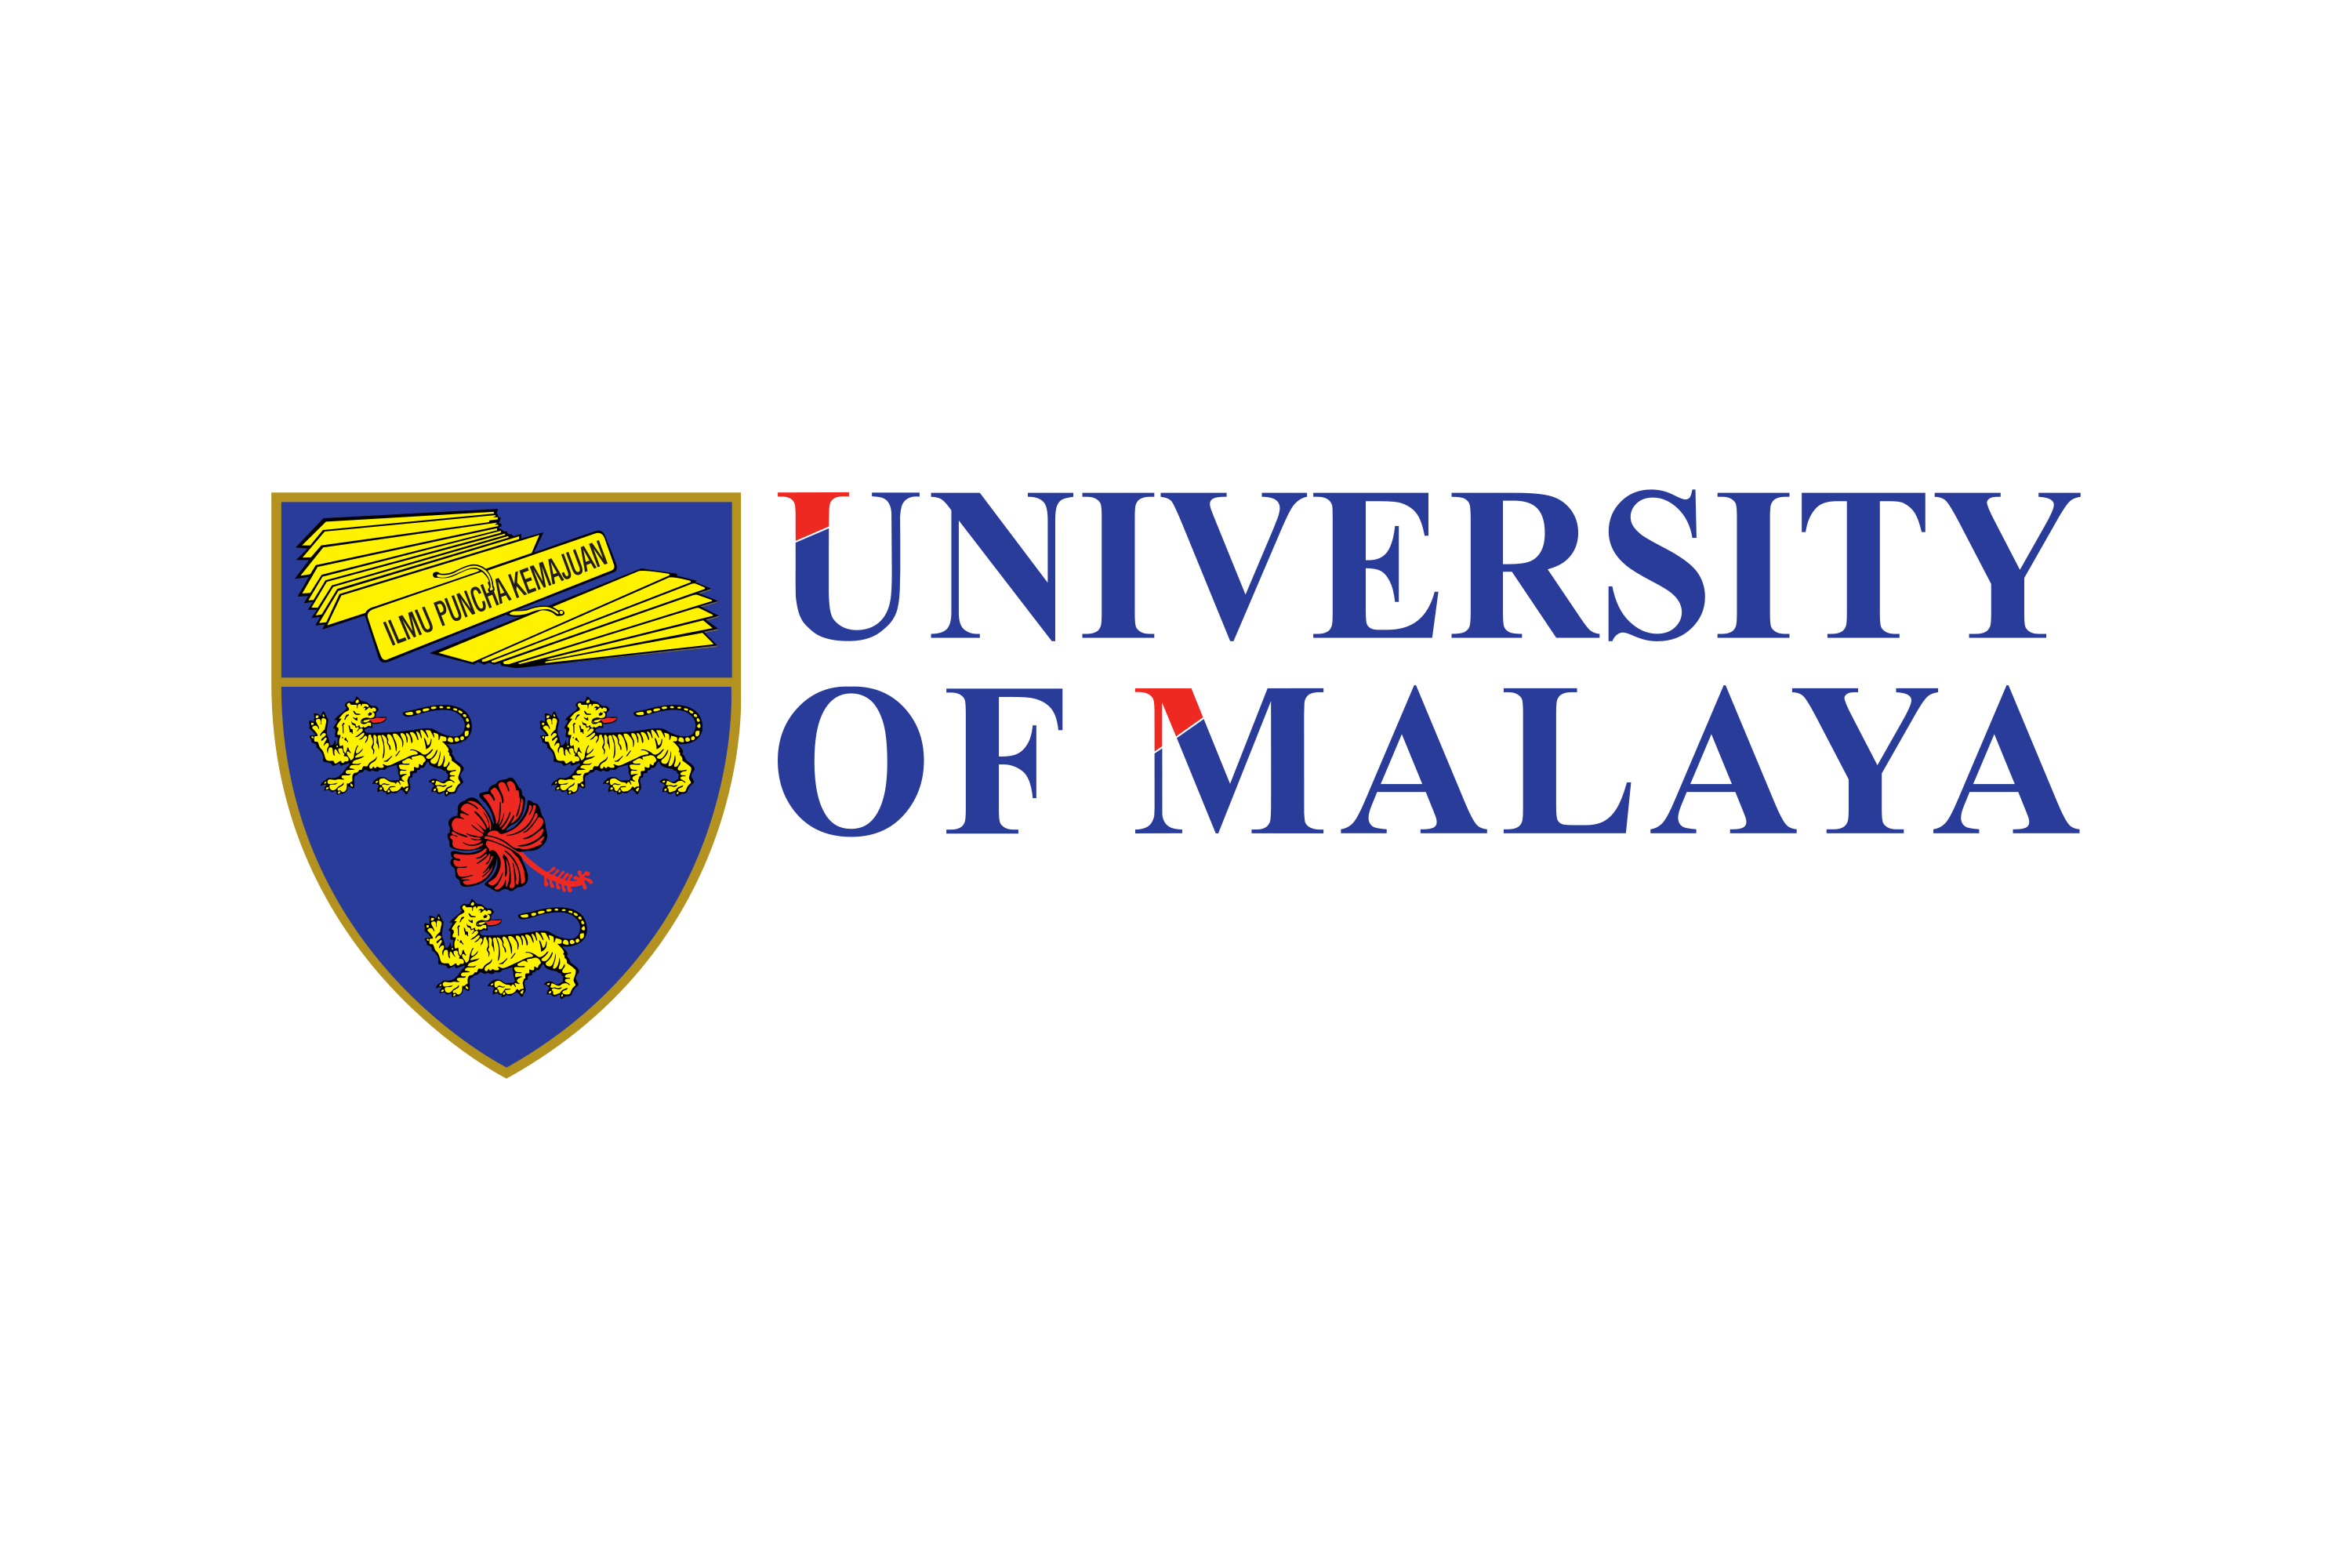 Download University of Malaya (UM, Universiti Malaya) Logo in SVG